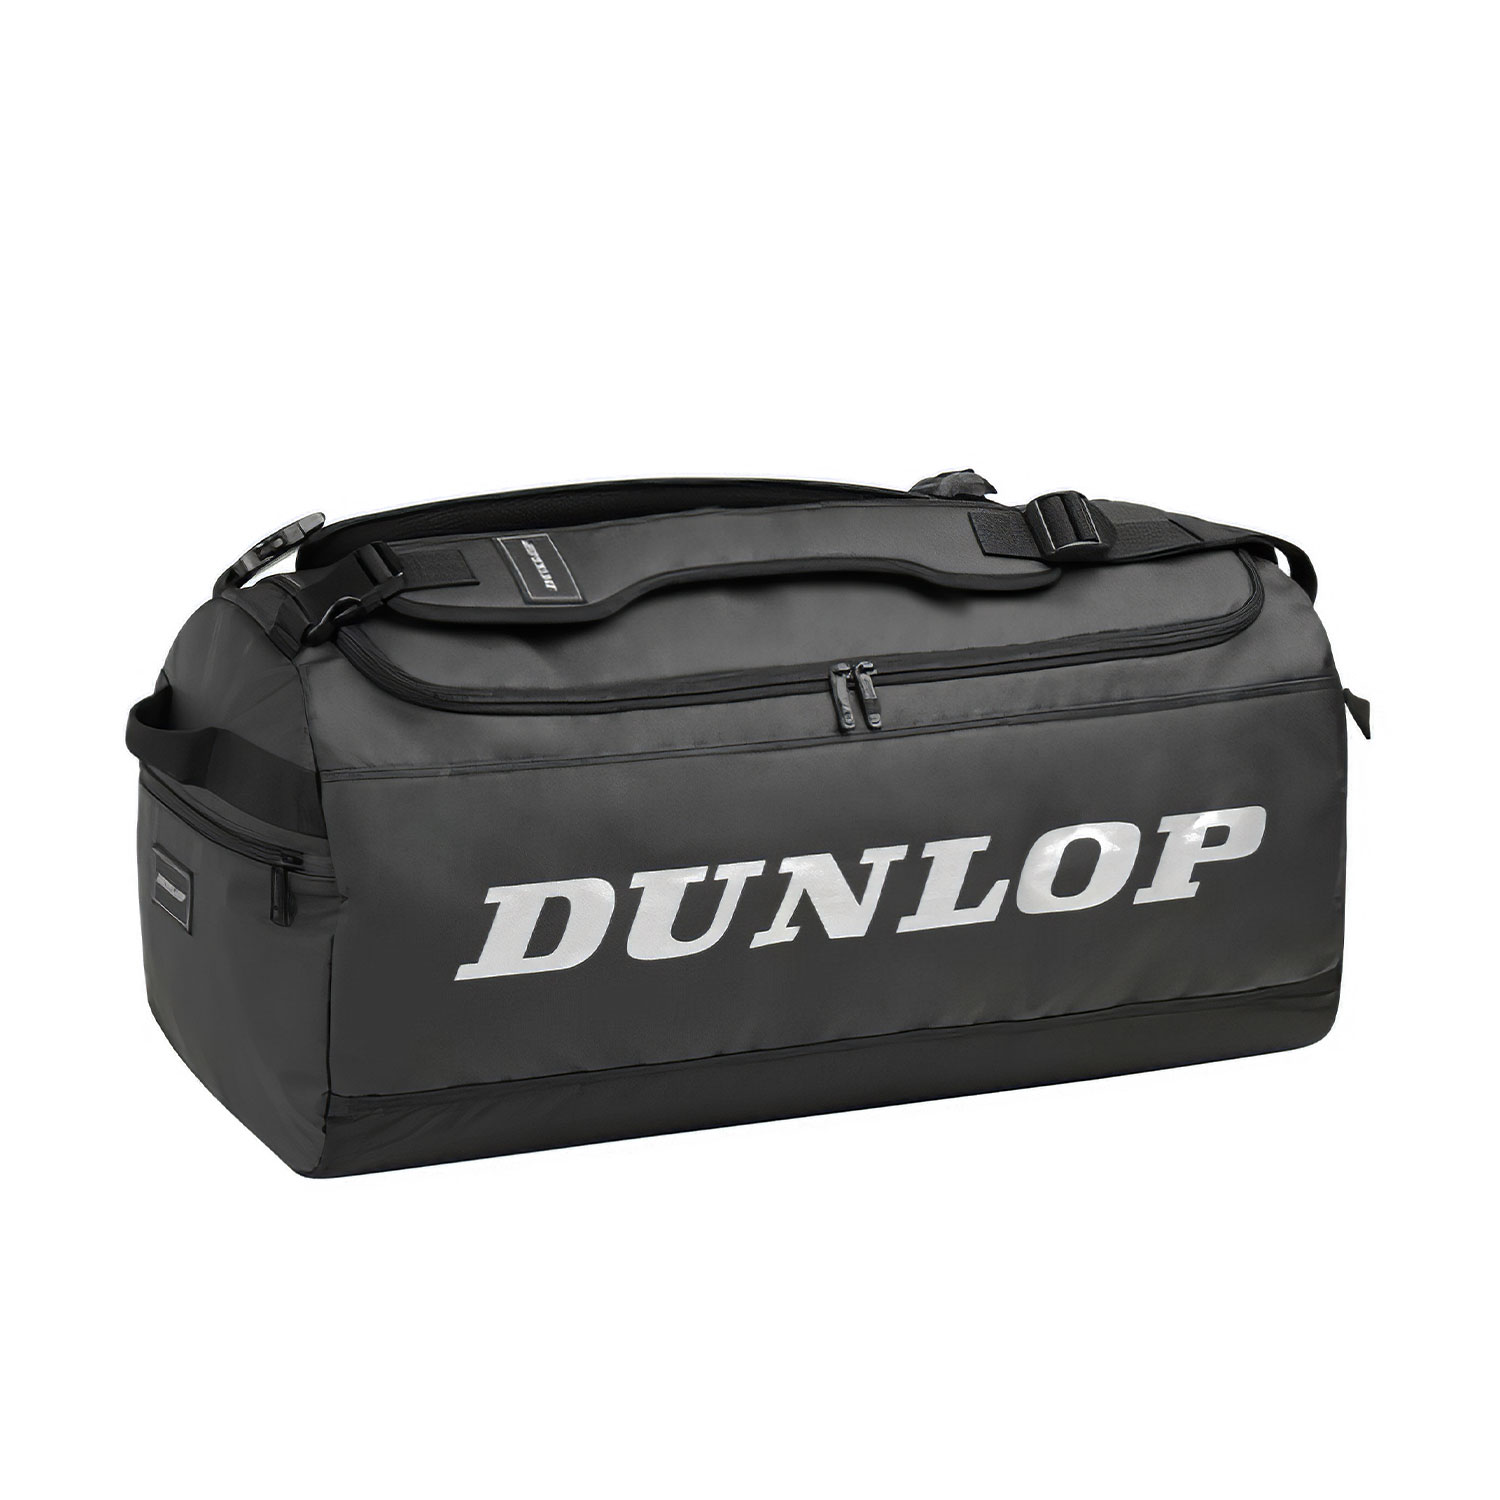 Dunlop Pro Bolso - Black